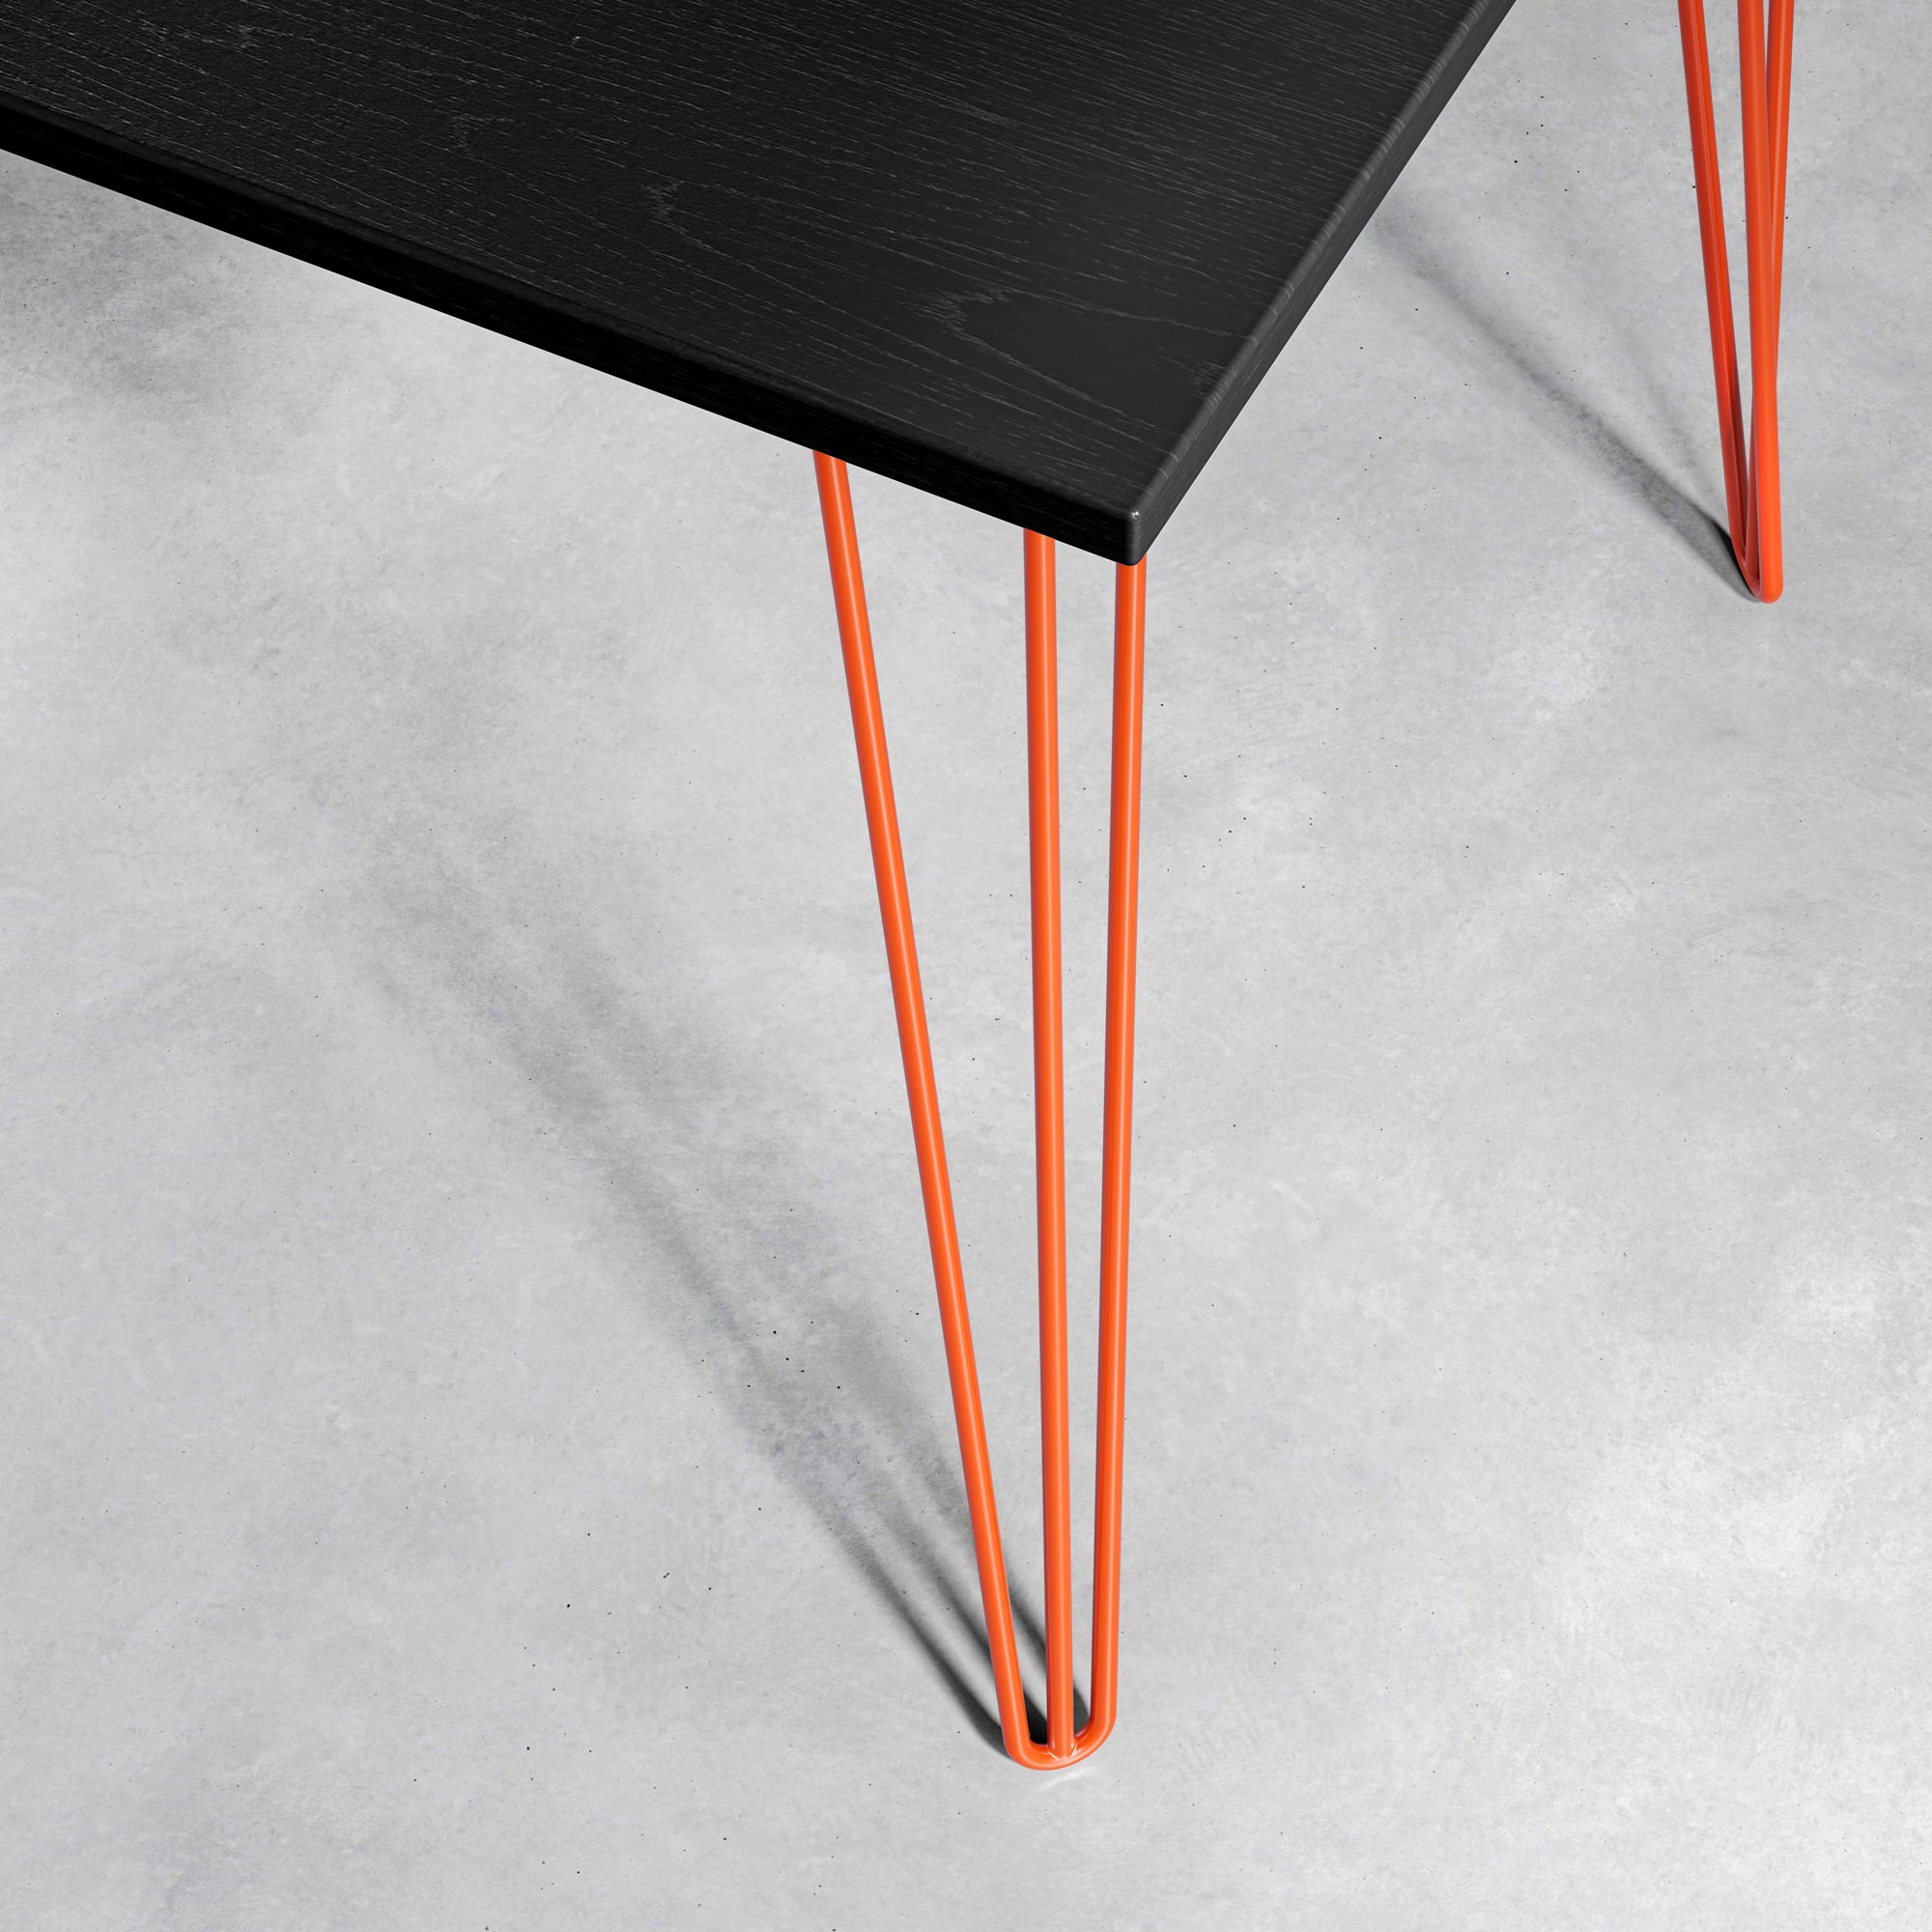 Black Ash Hairpin Table-Small (60cm x 120cm)-Orange-The Hairpin Leg Co.